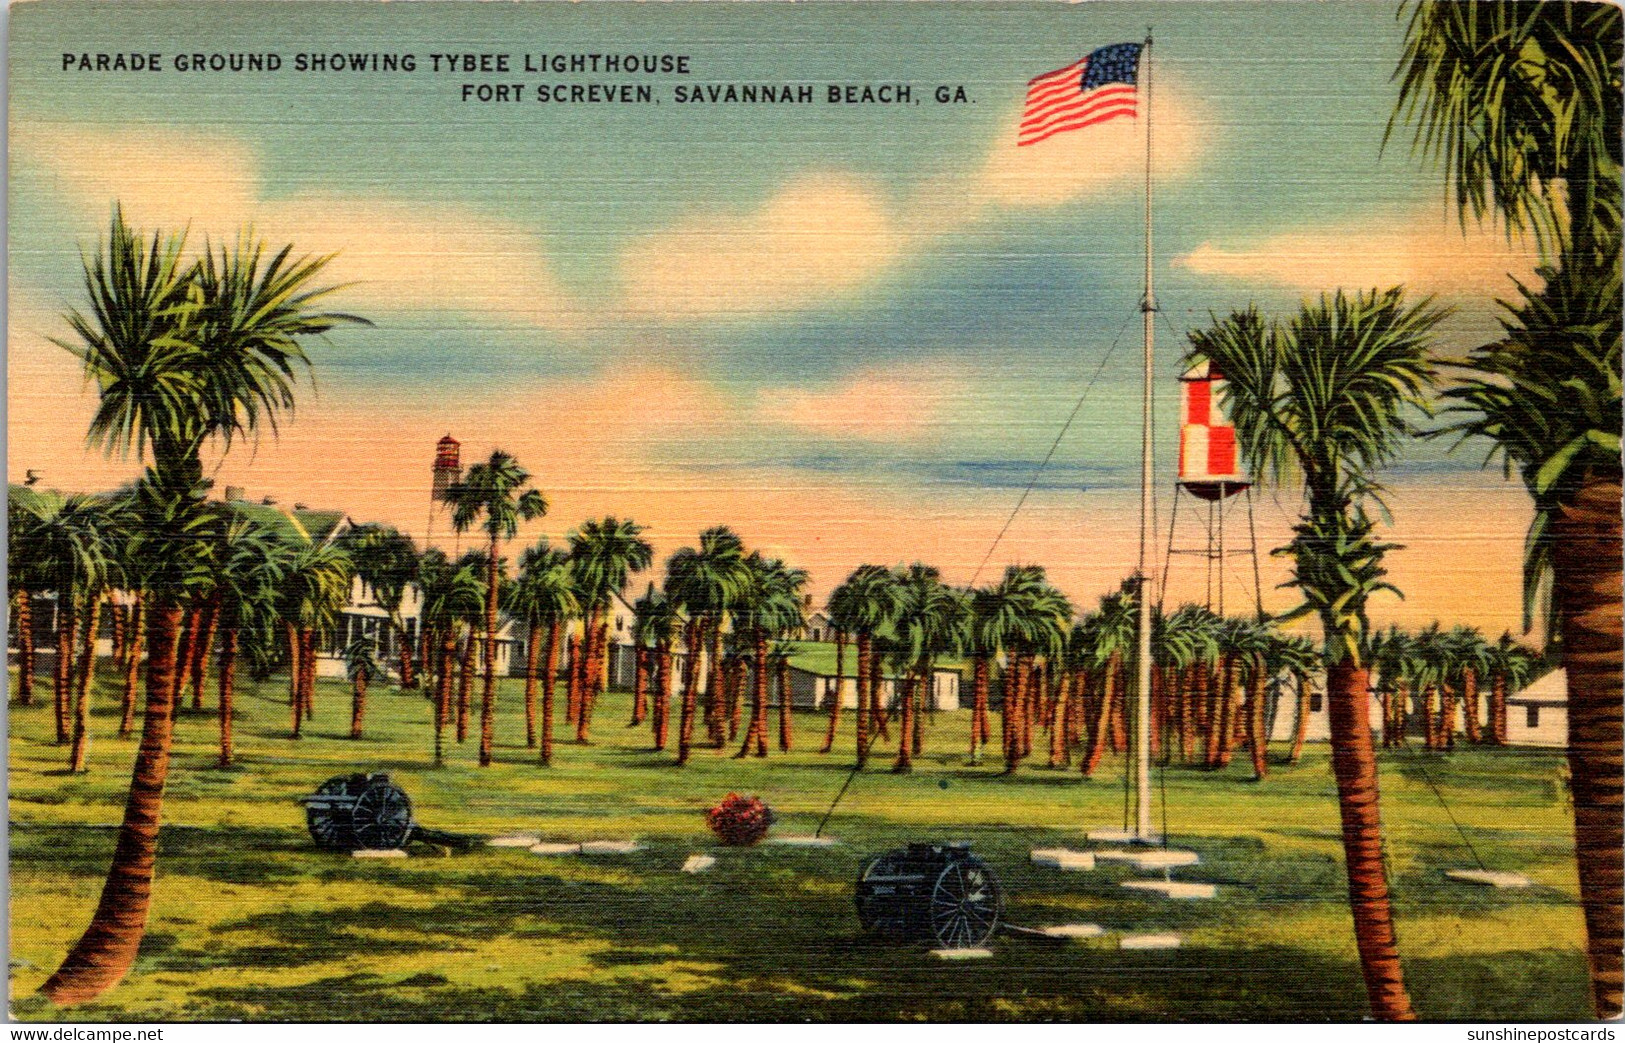 Geogria Savannah Beach Fort Screven Parade Ground Showing Tybee Lighthouse - Savannah